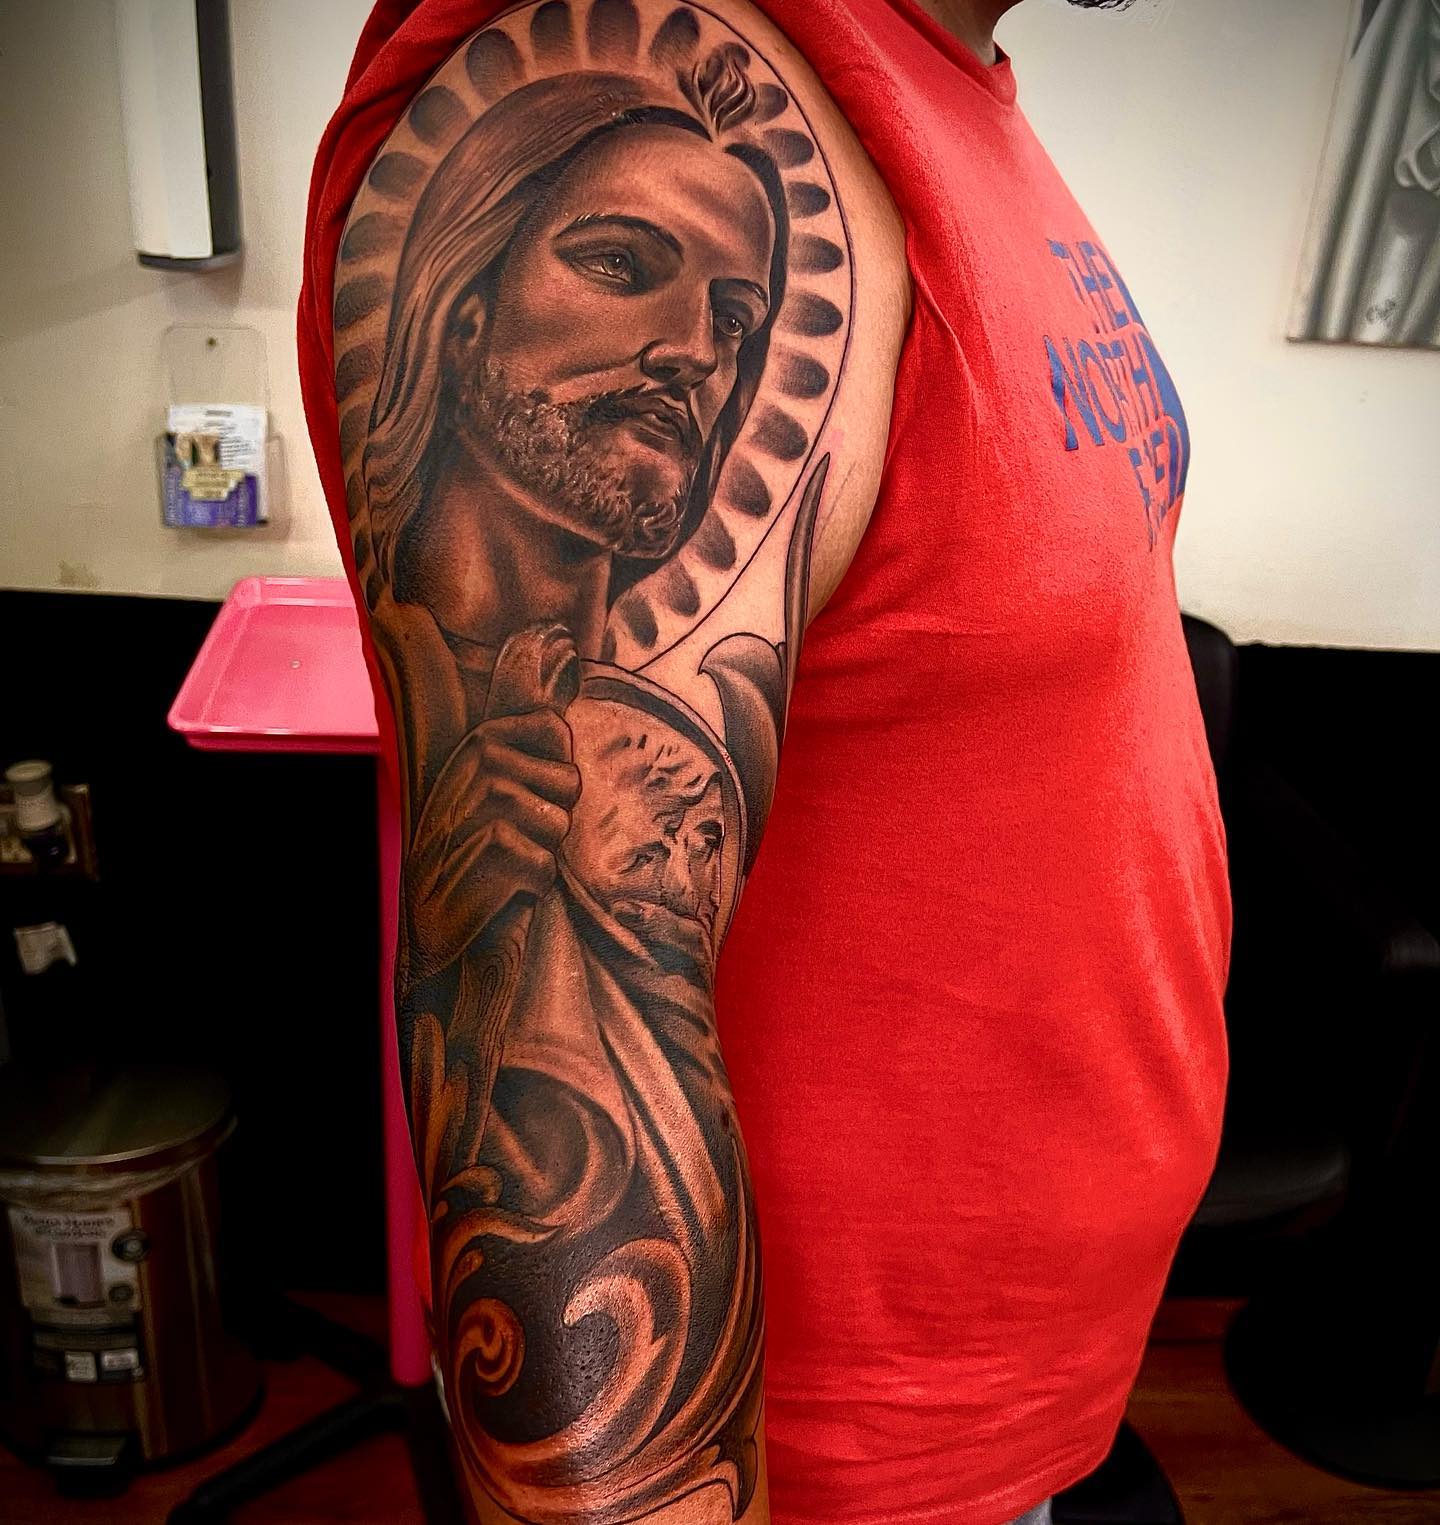 Tatuaje de San Judas en todo el brazo